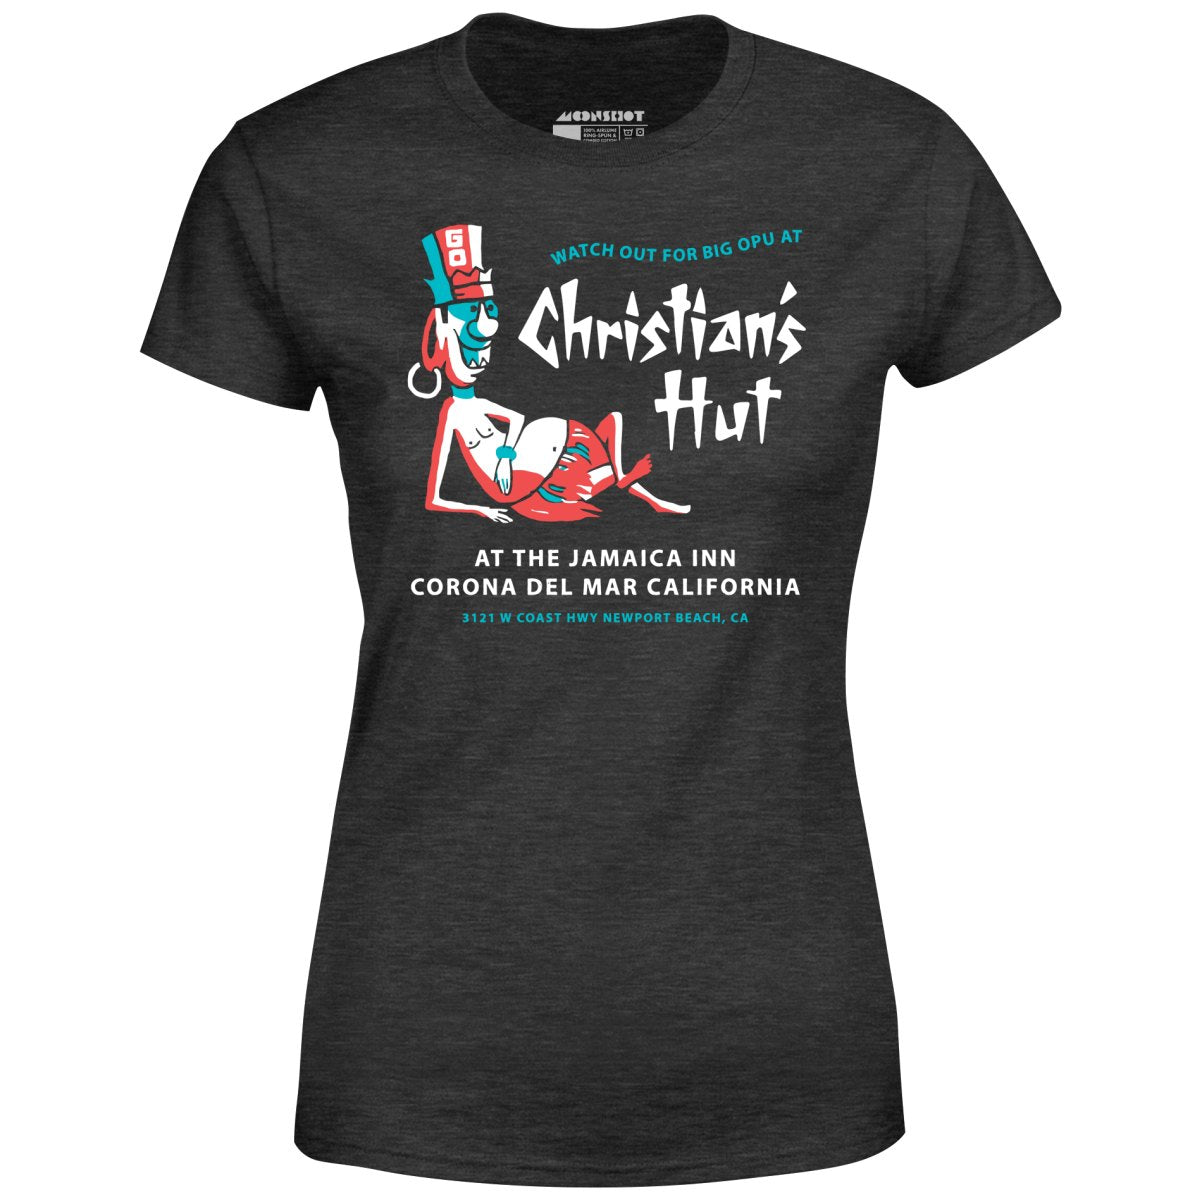 Christian's Hut - Corona Del Mar, CA - Vintage Tiki Bar - Women's T-Shirt